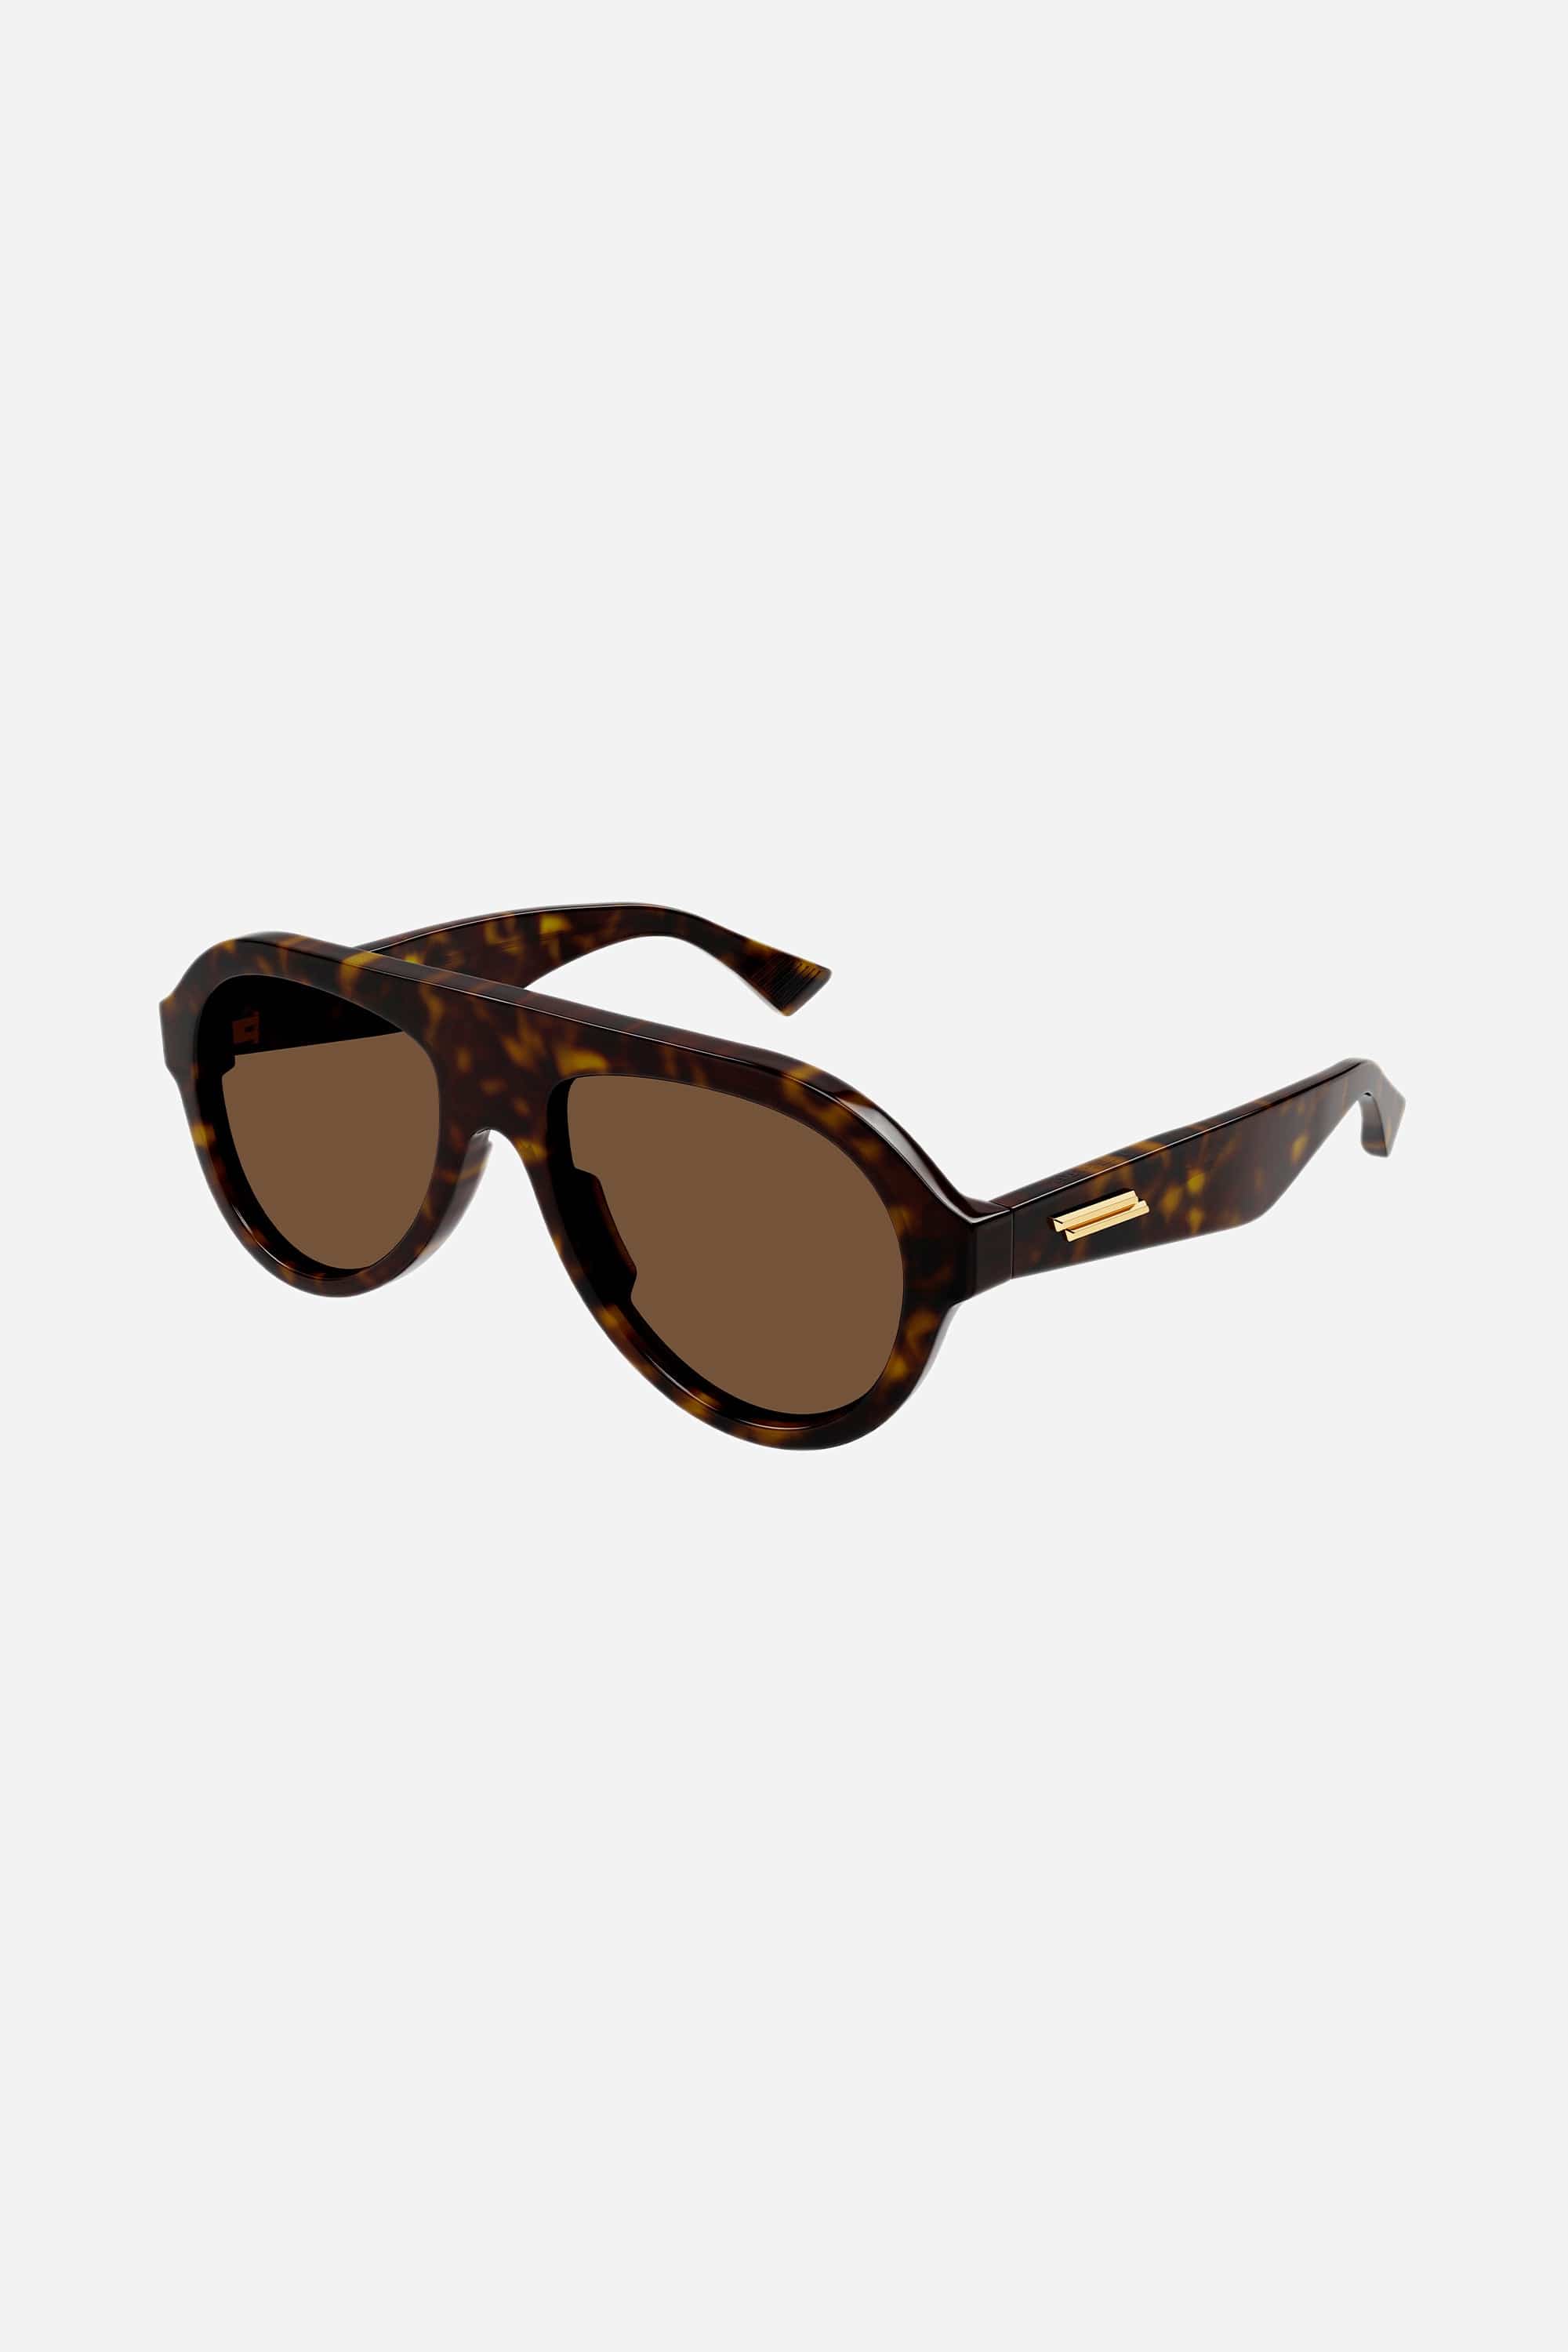 Bottega Veneta pilot brown sunglasses - Eyewear Club